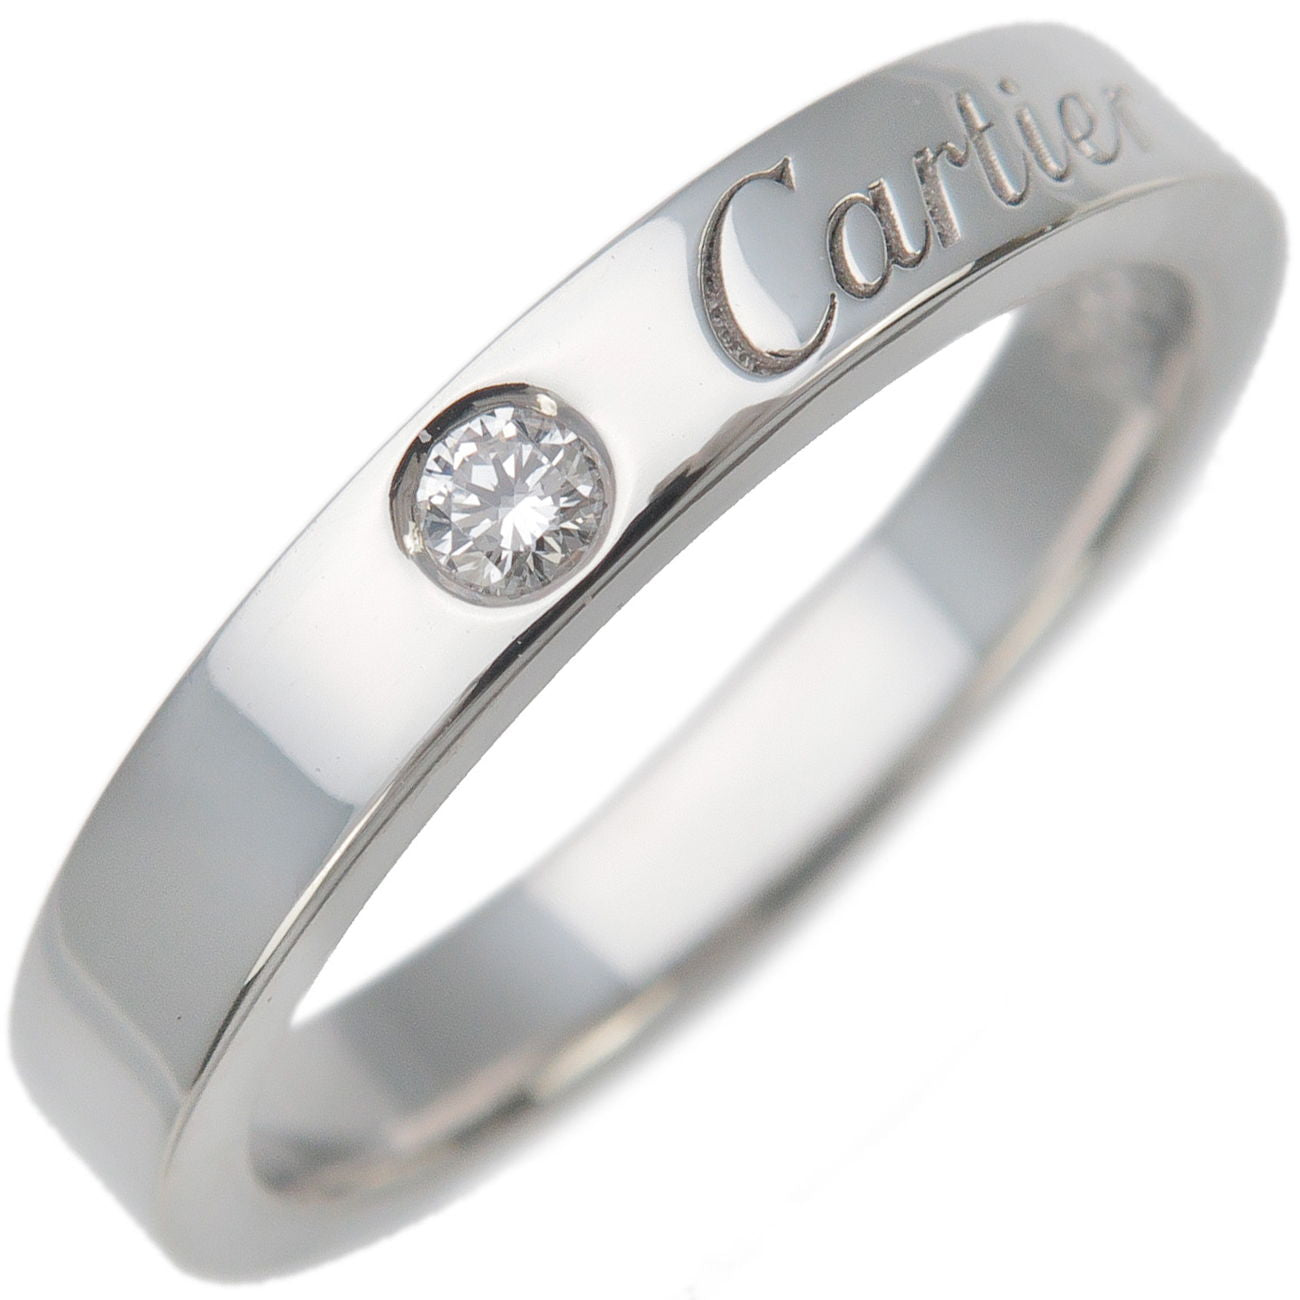 Cartier-Engraved-1P-Diamond-Ring-T950-Platinum-#48-US4.5-5-EU48